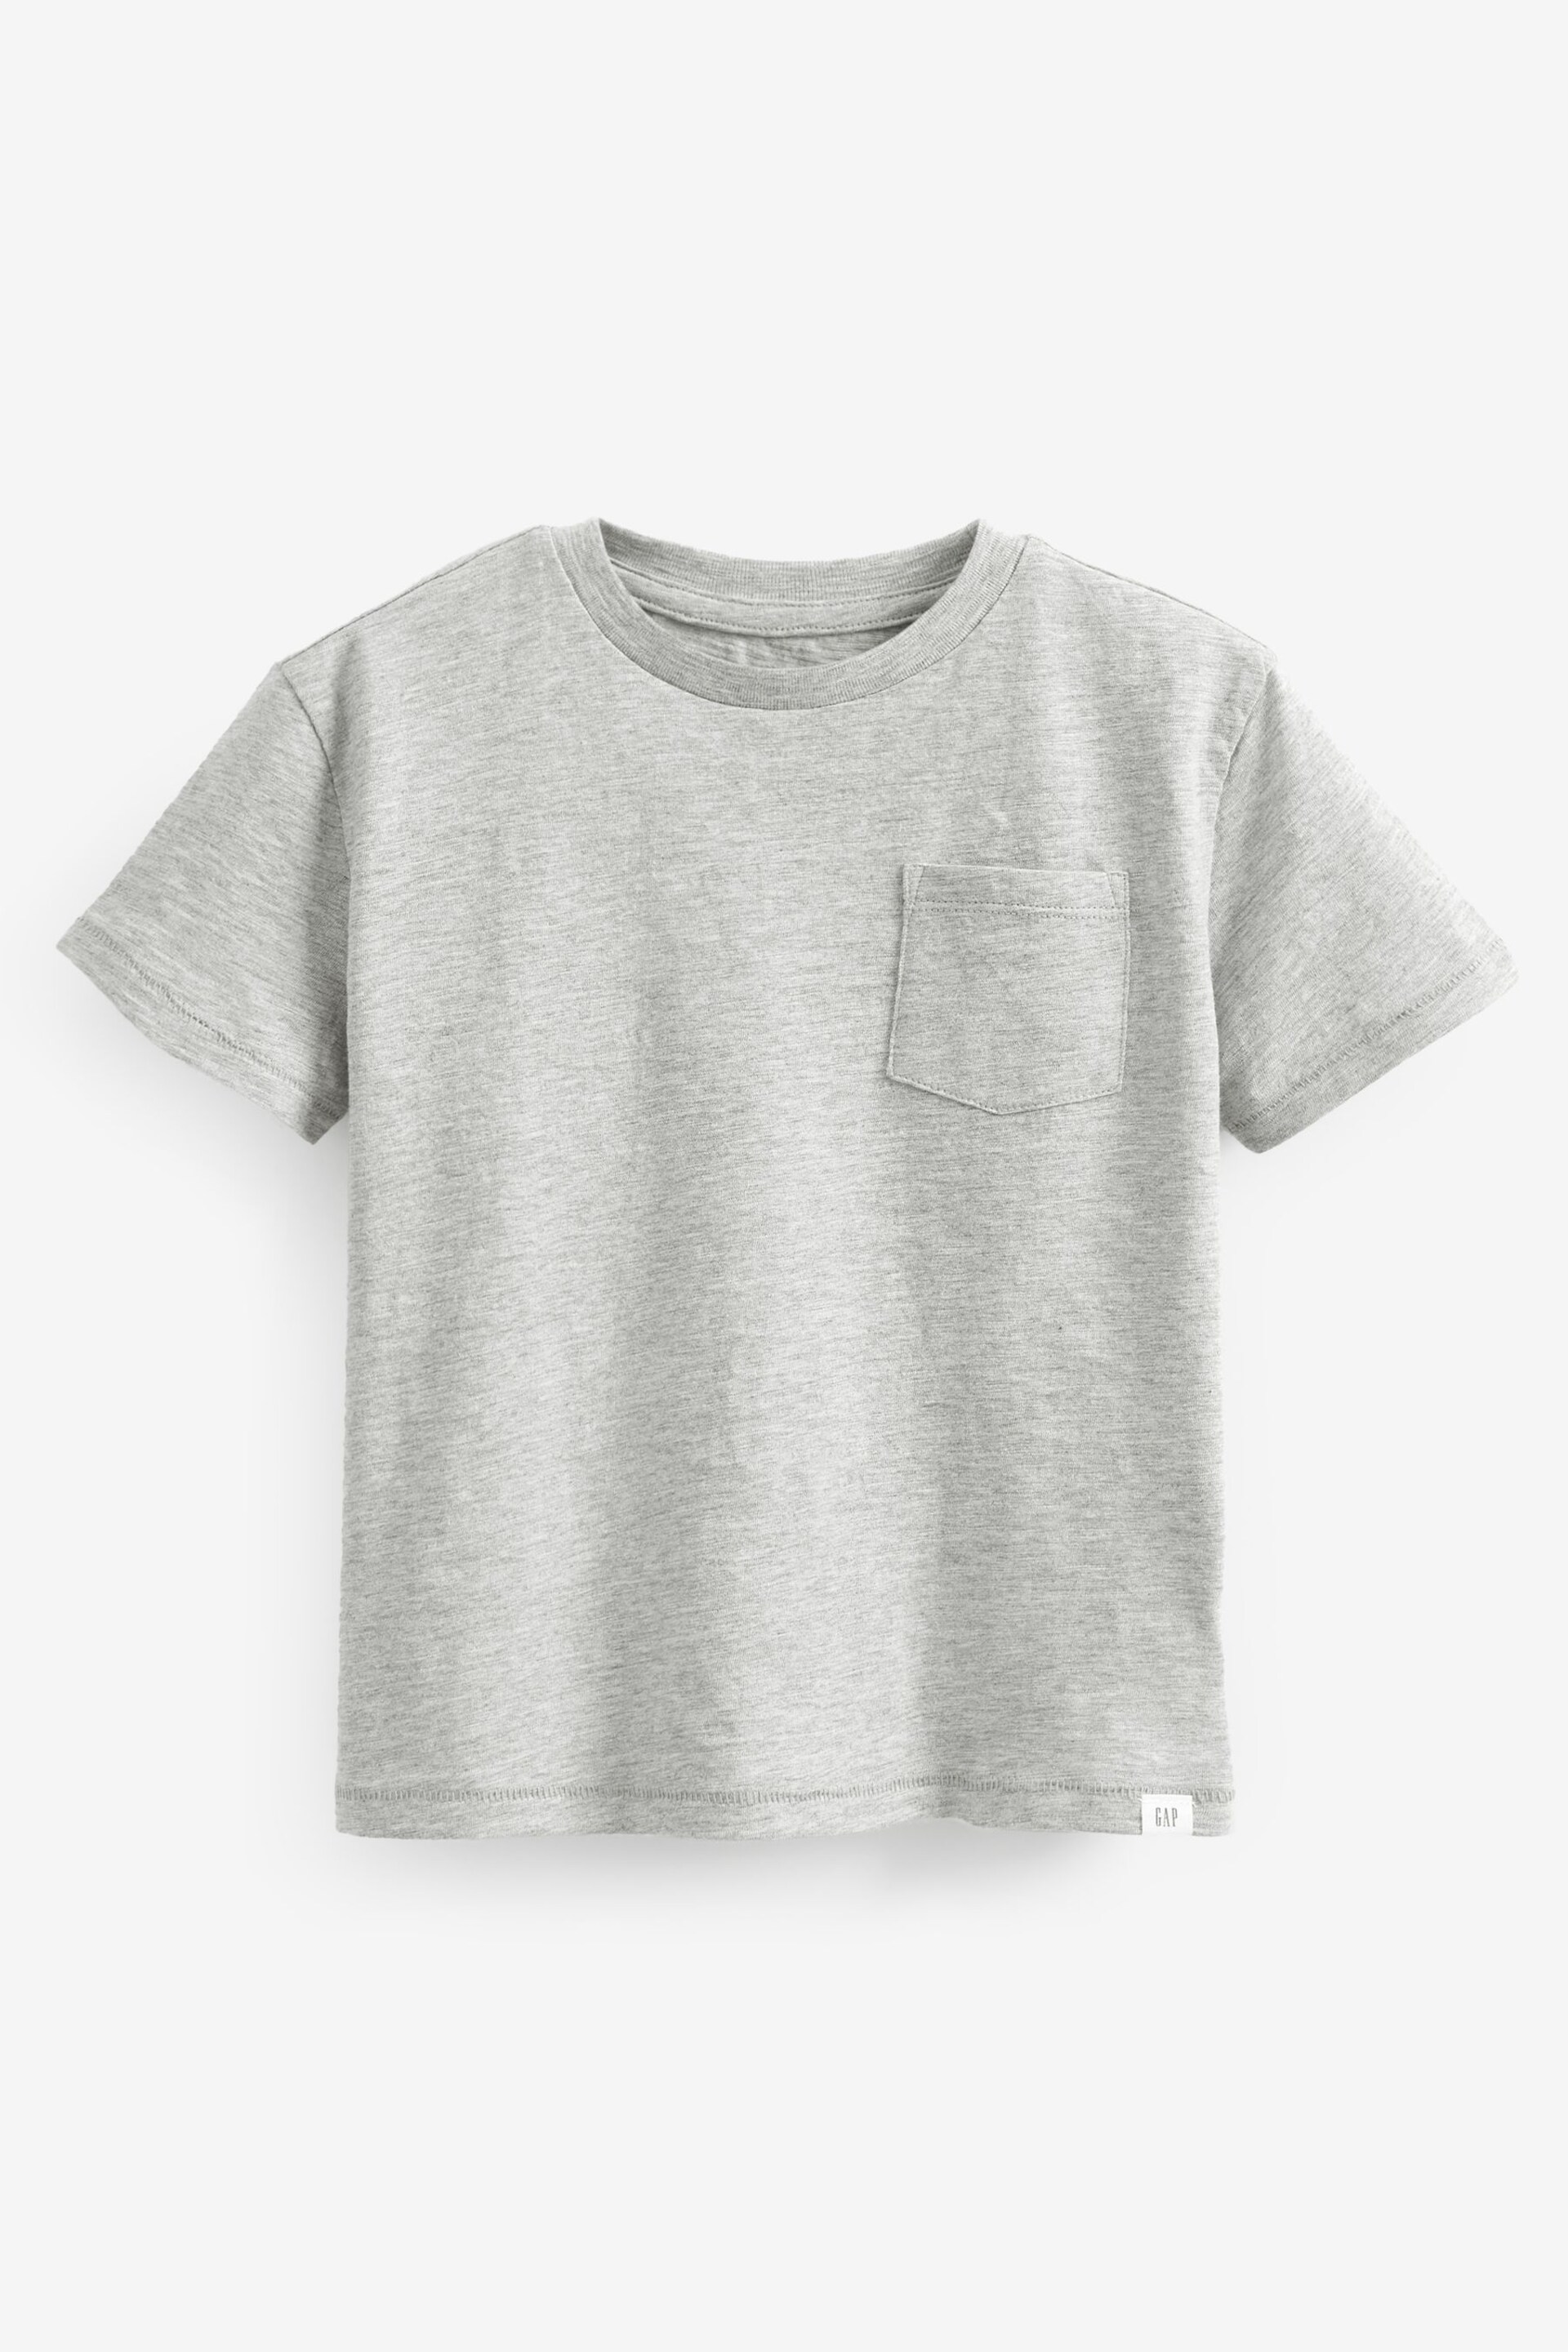 Gap Grey Pocket Short Sleeve Crew Neck T-Shirt (4-13yrs) - Image 1 of 3